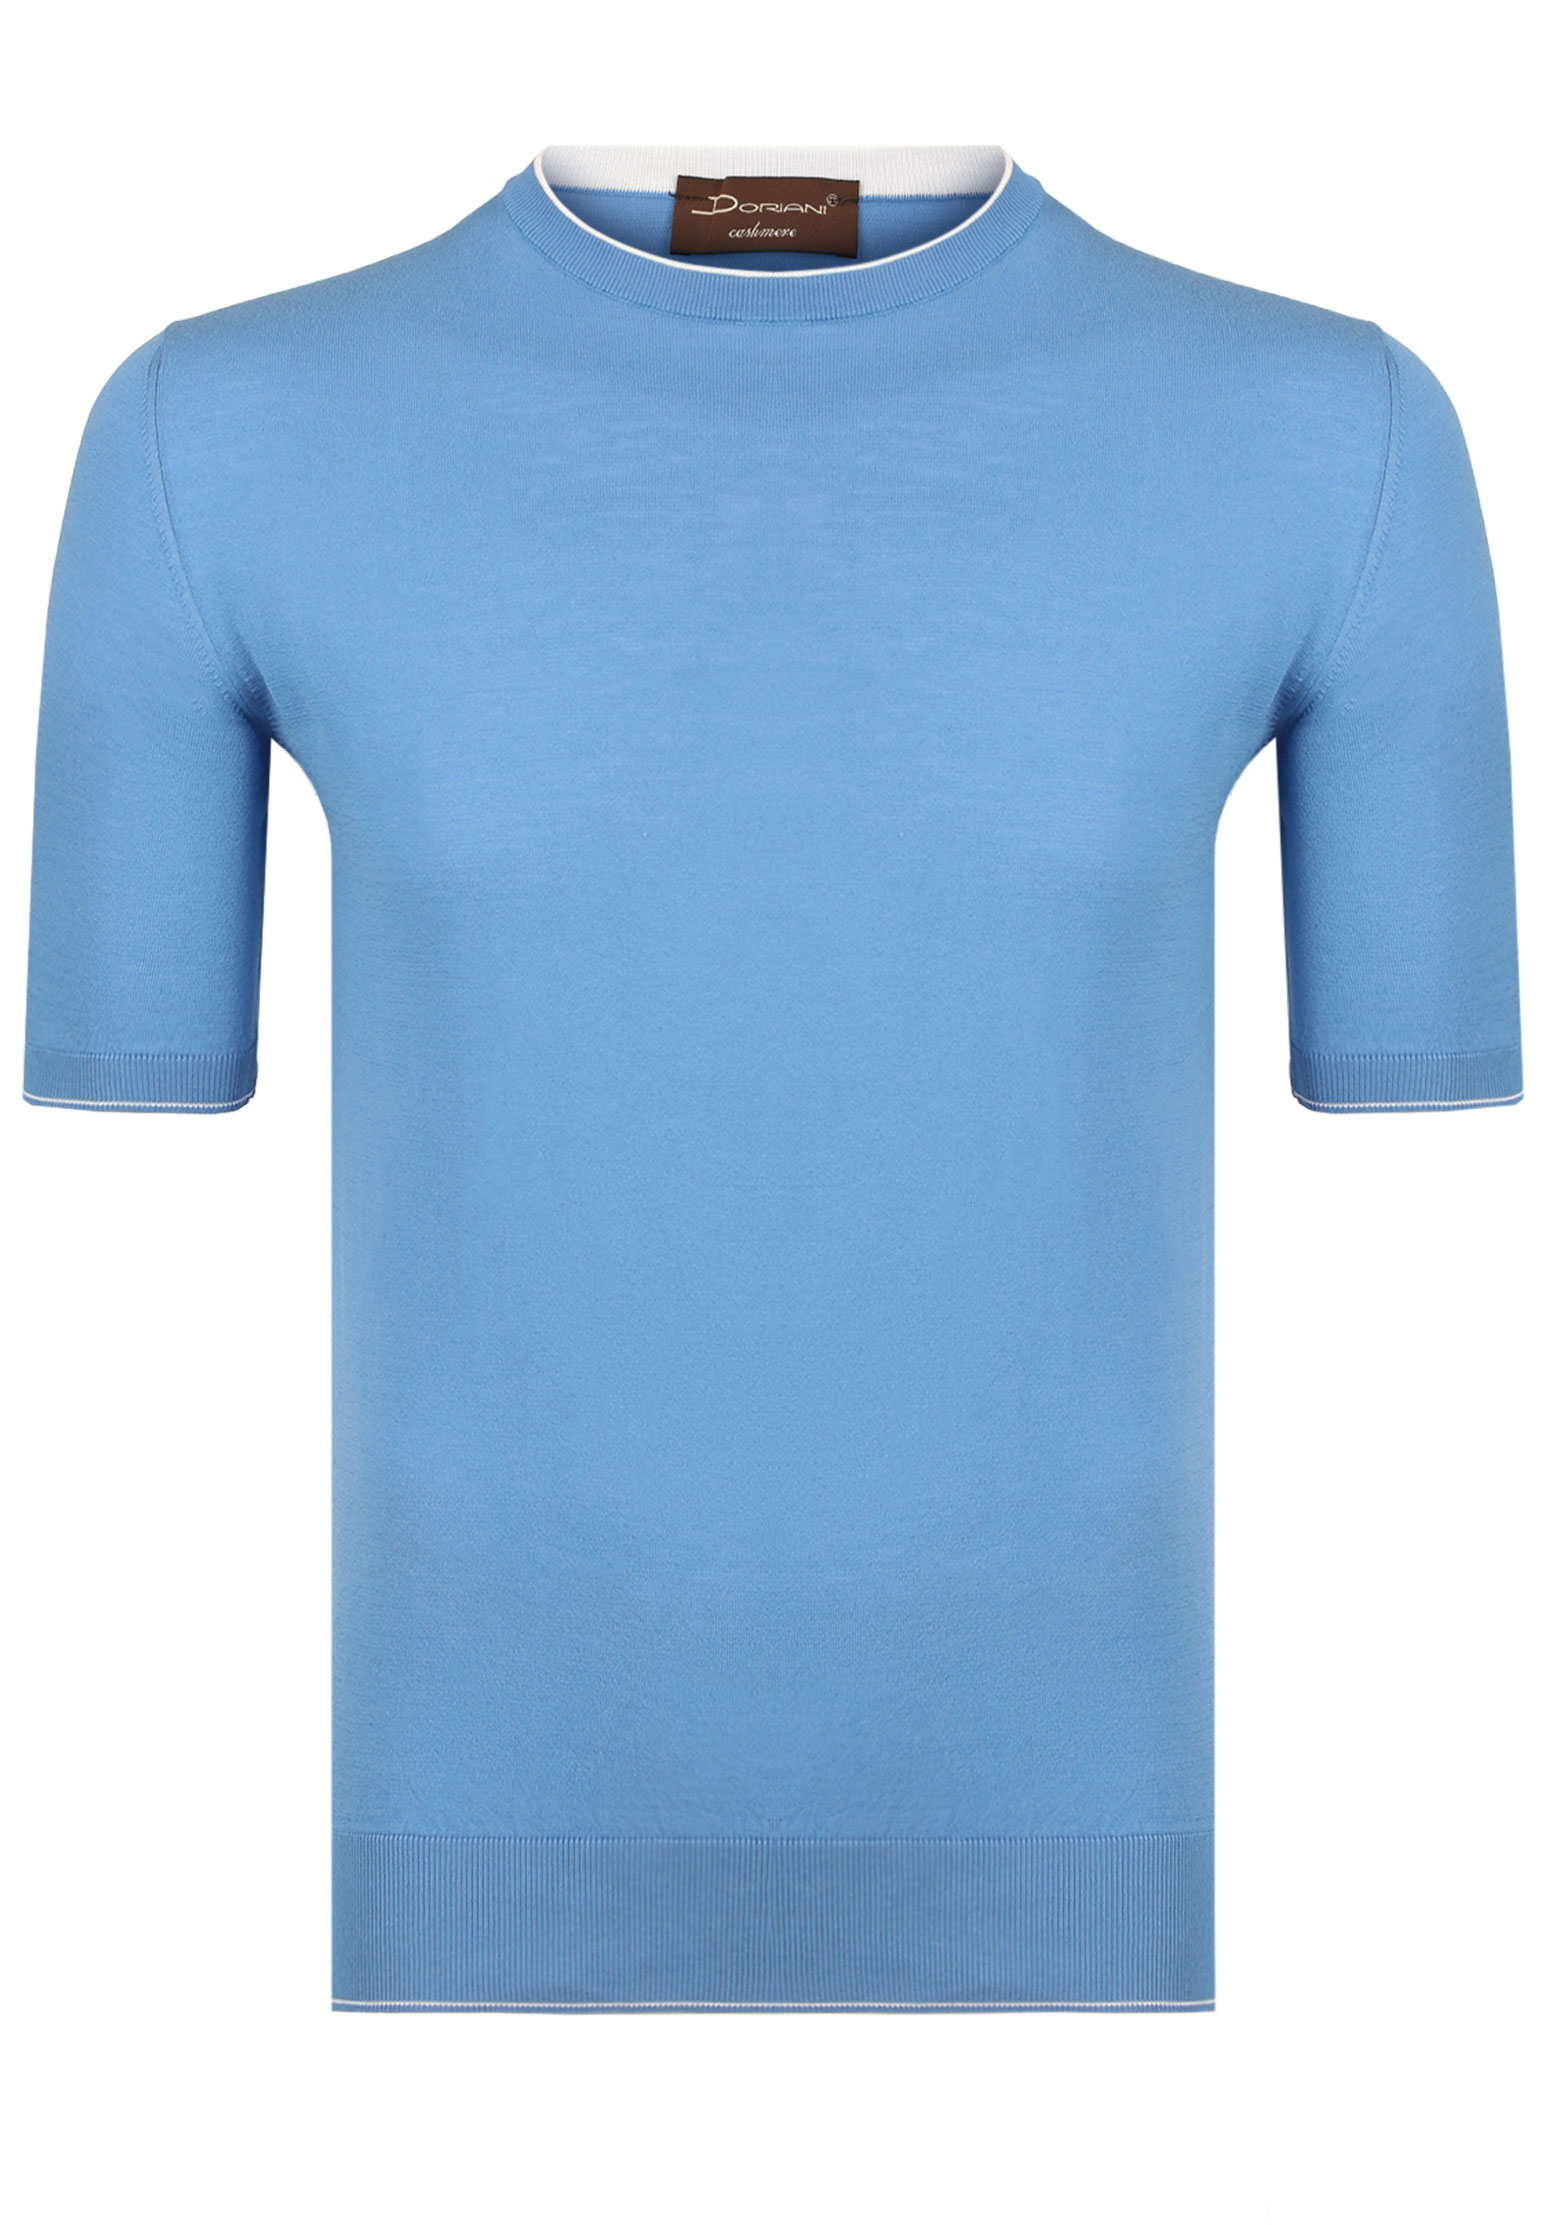 Пуловер DORIANI Голубой, размер 48 178346 - фото 1